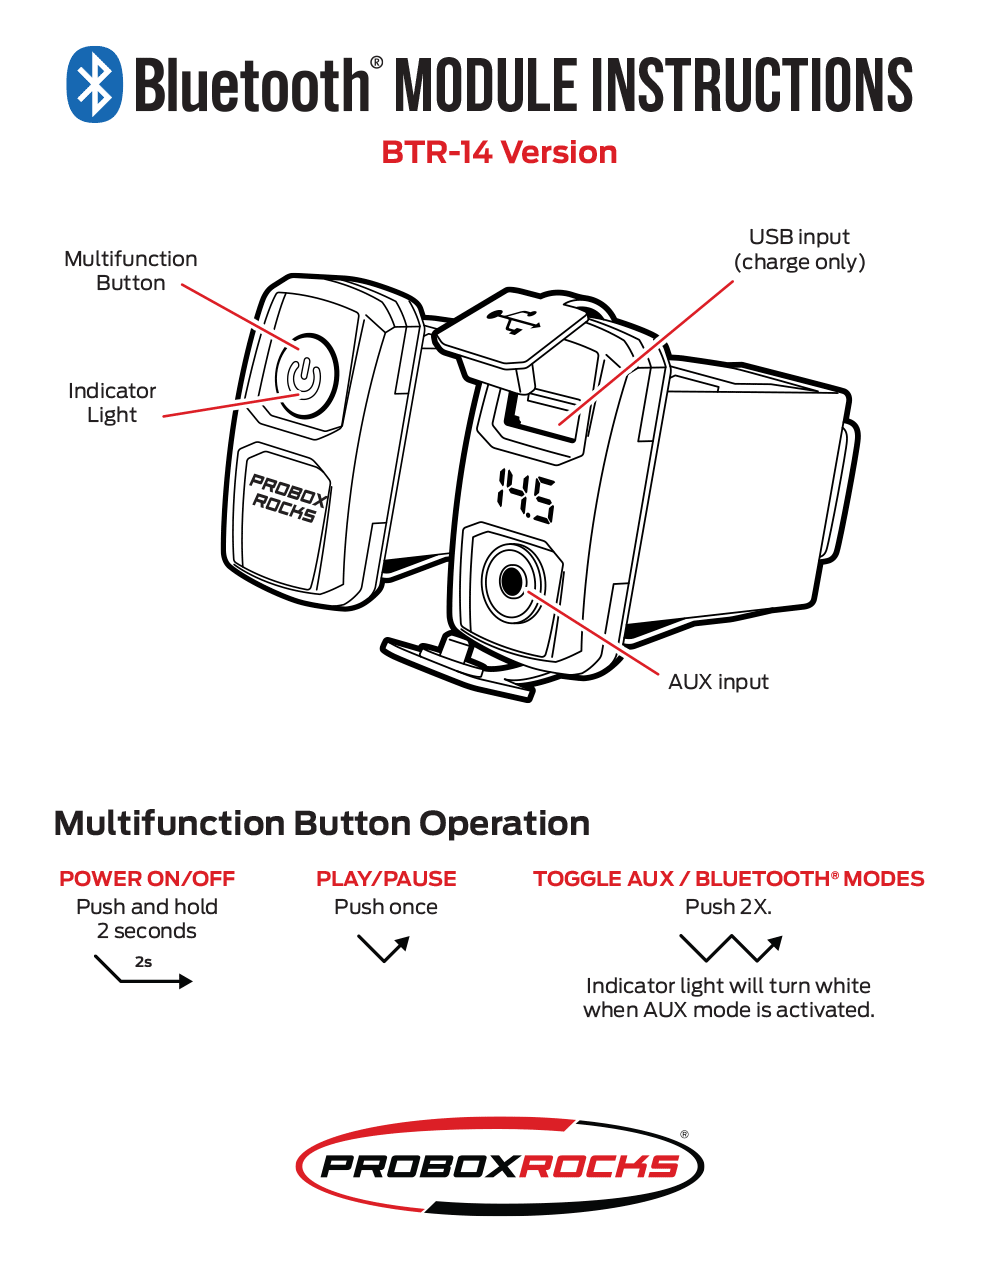 BTR-14 module instructions